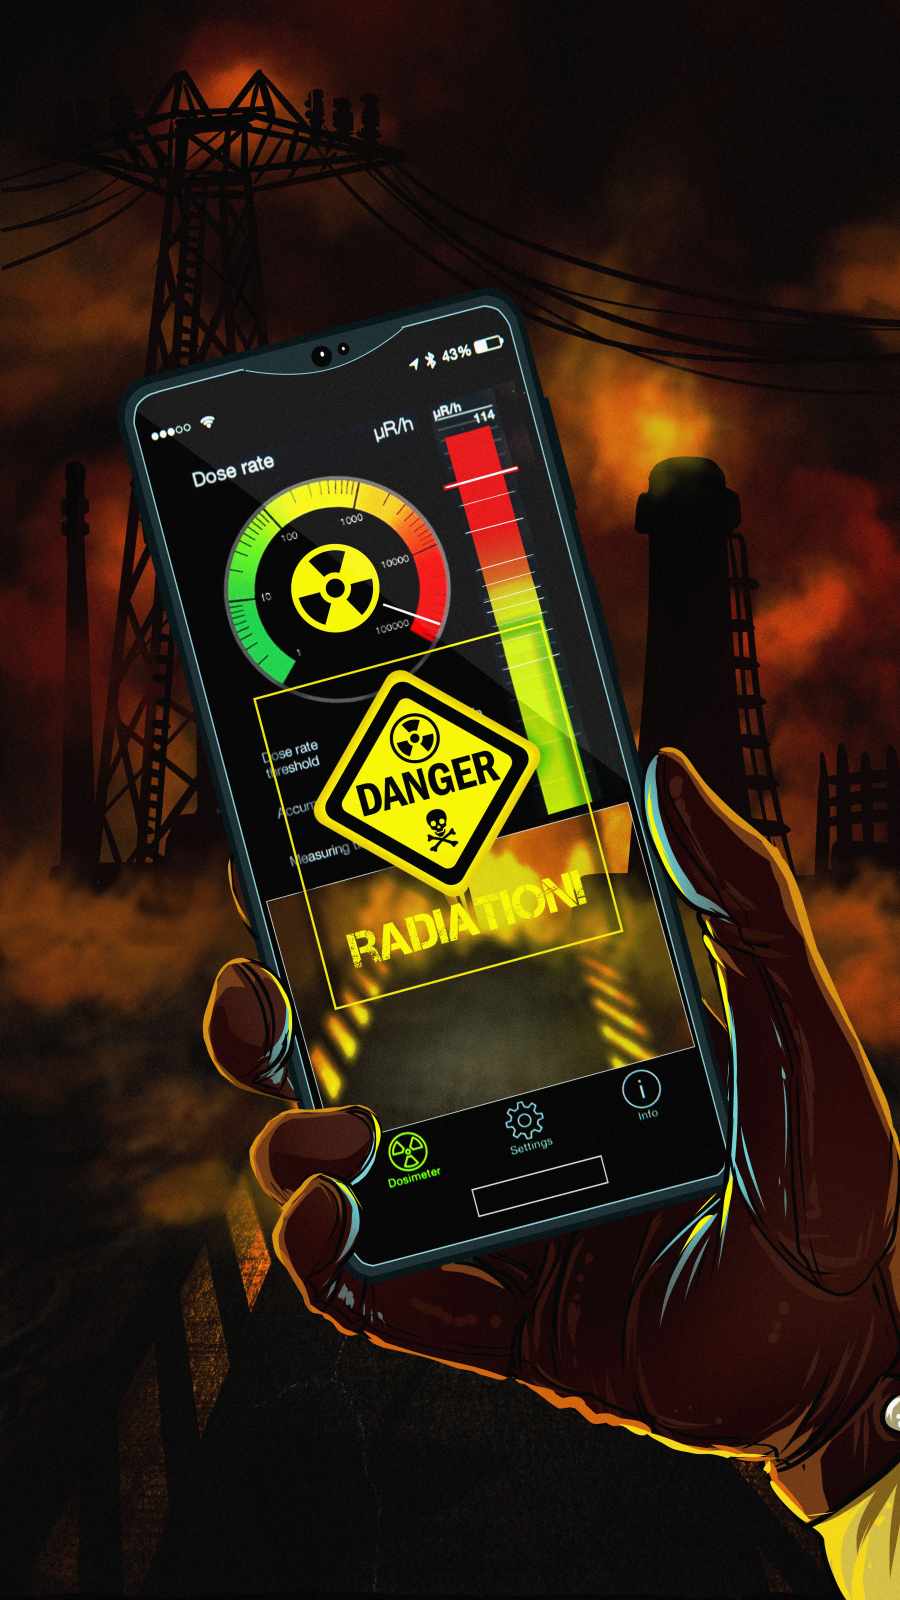 iPhone Radiation Warning iPhone Wallpaper